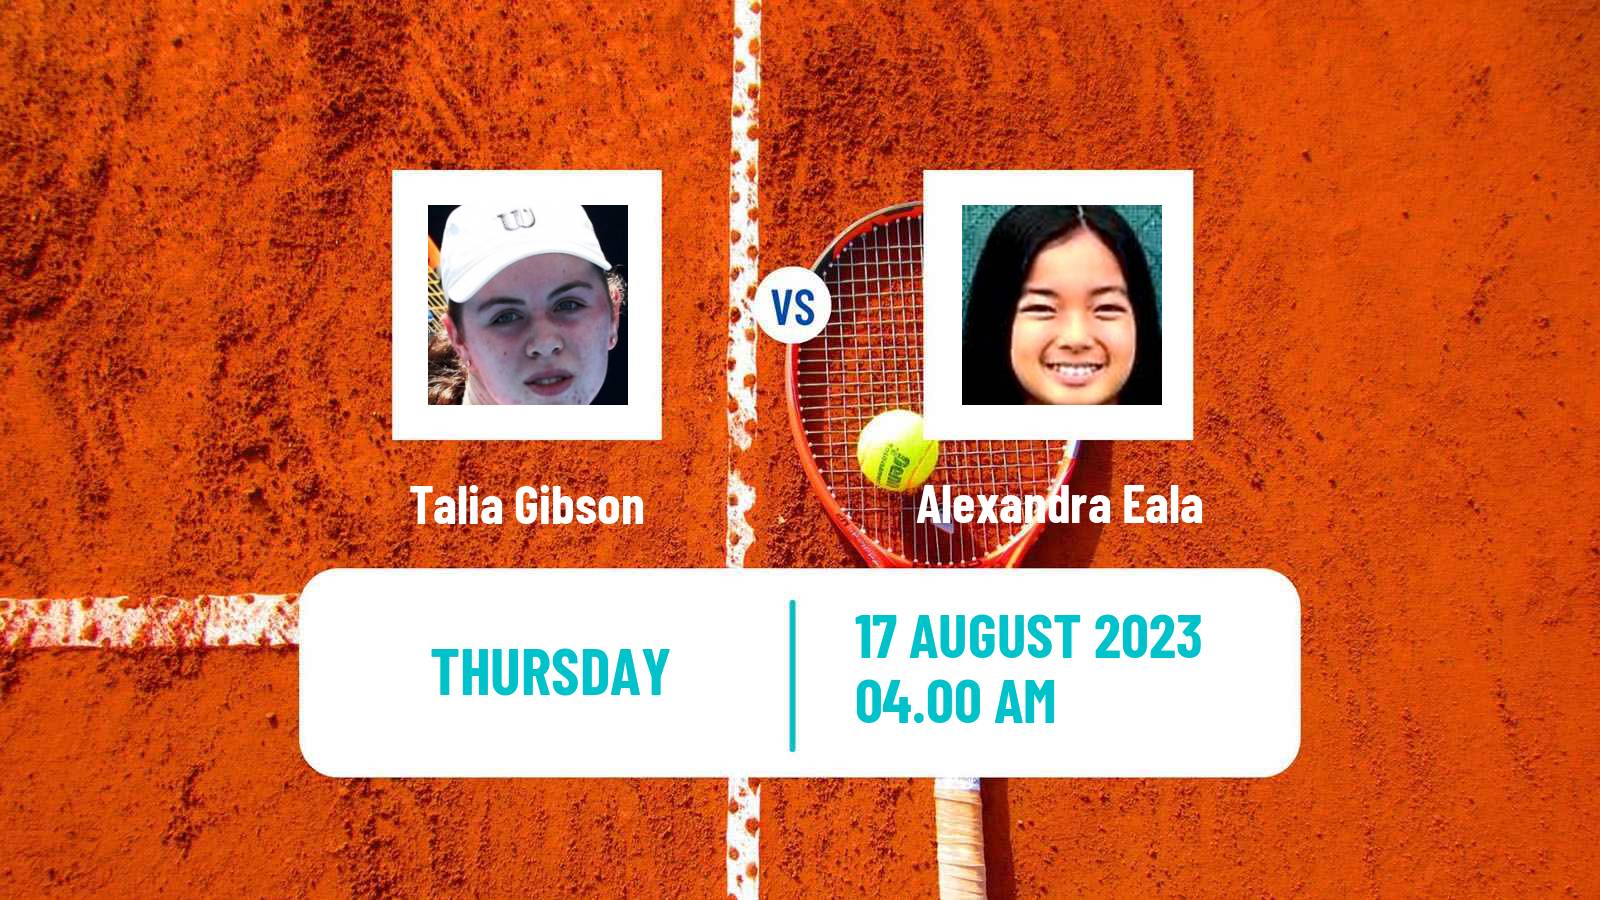 Tennis ITF W25 Aldershot Women Talia Gibson - Alexandra Eala